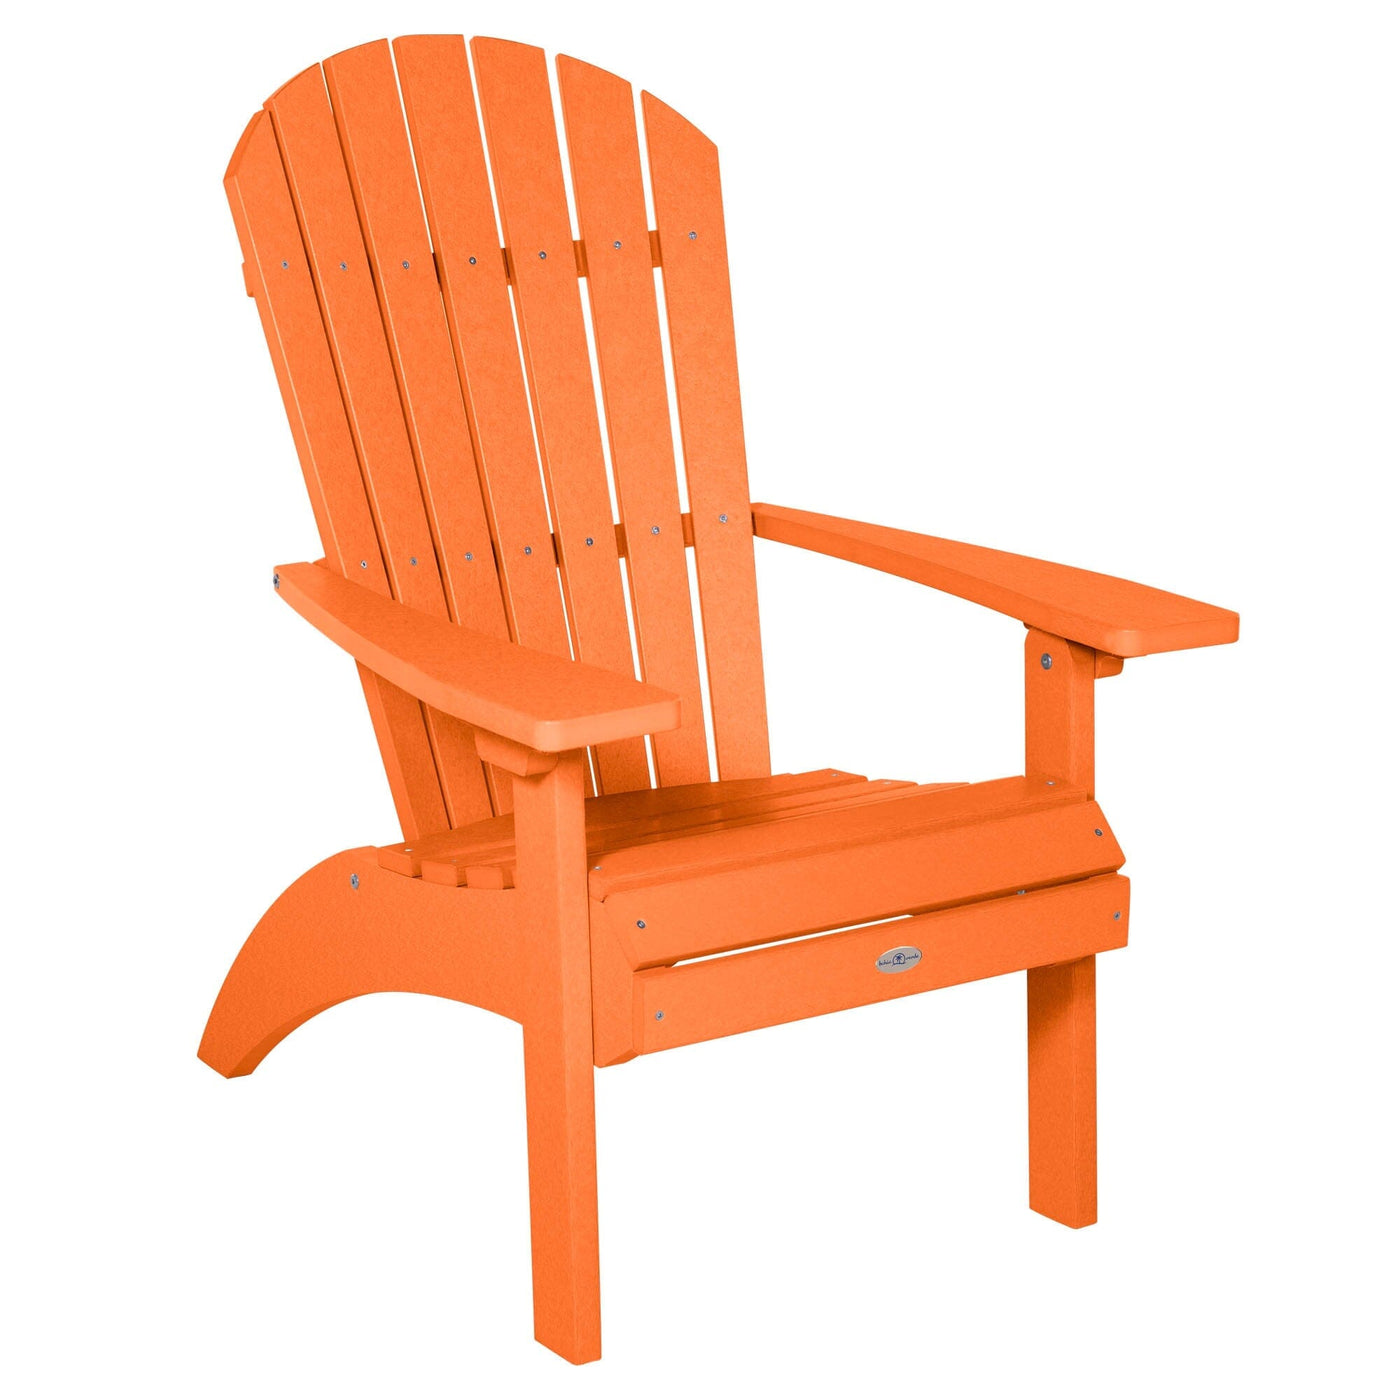 Waterfall Comfort Height Adirondack Chair Chair Bahia Verde Outdoors Citrus Orange 